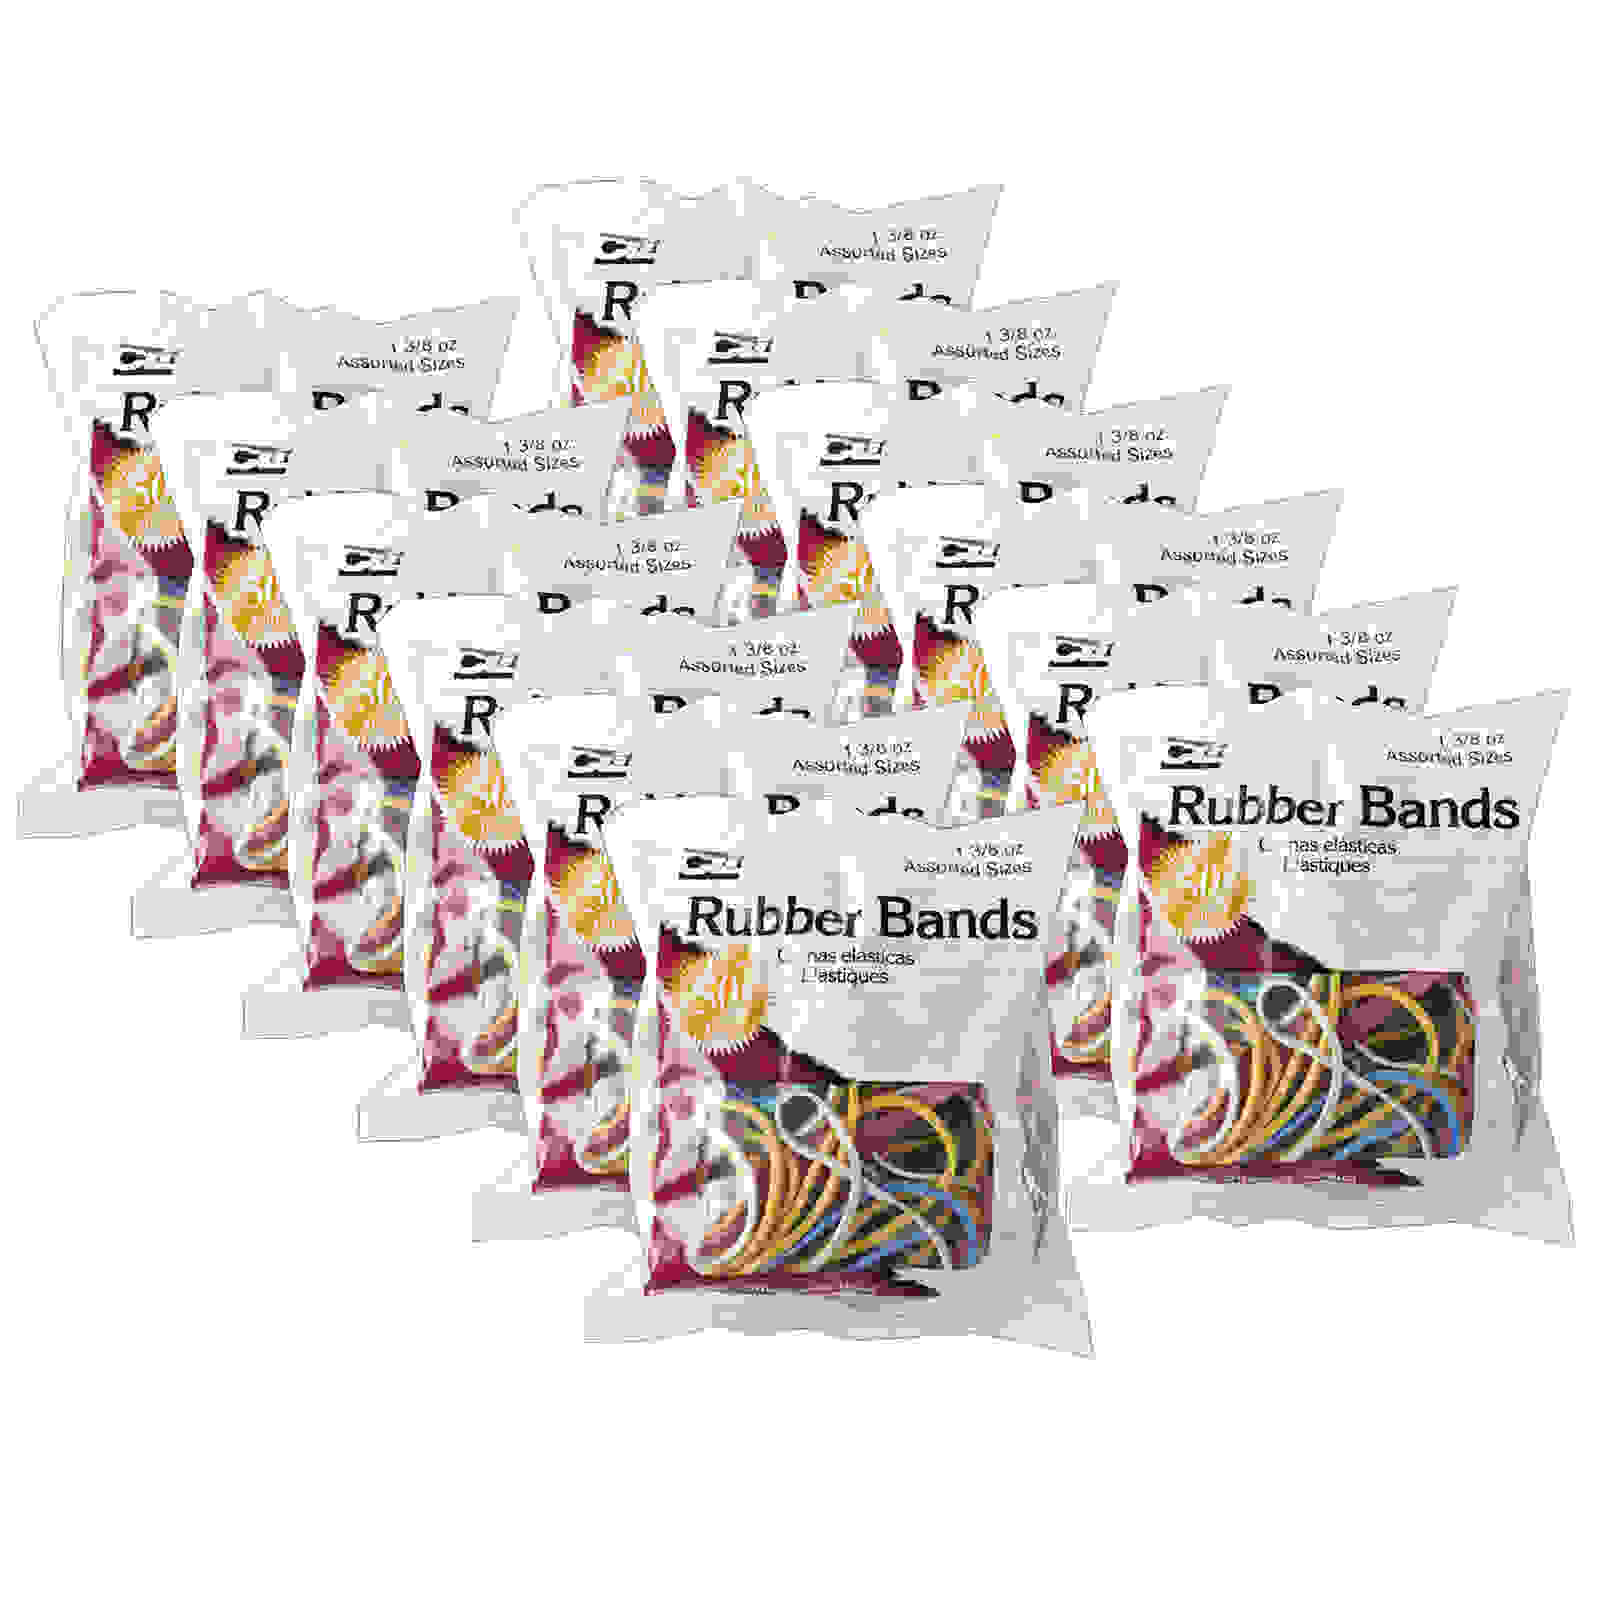 Rubber Bands, Assorted Colors, 1-3/8oz Bag, 12 Bags